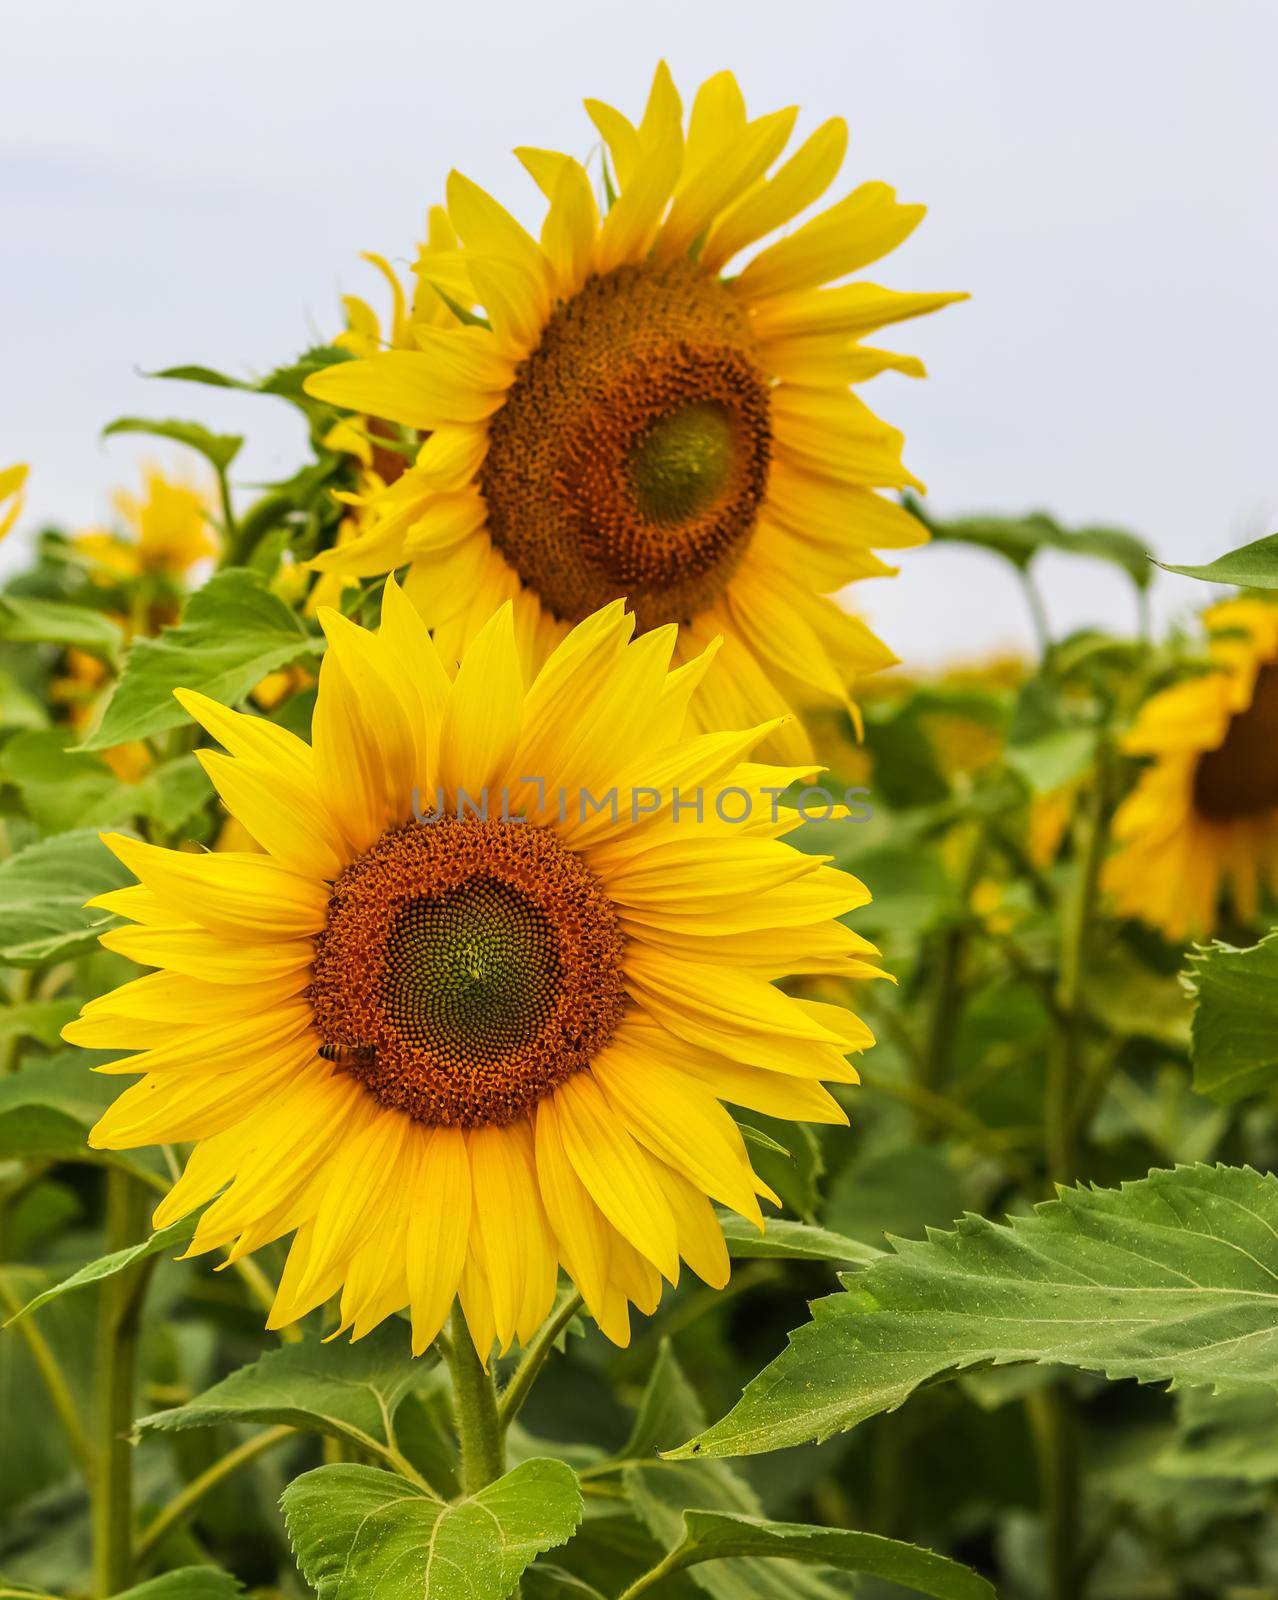 Yellow sunflower in an abundance plantation field in summer. High quality photo